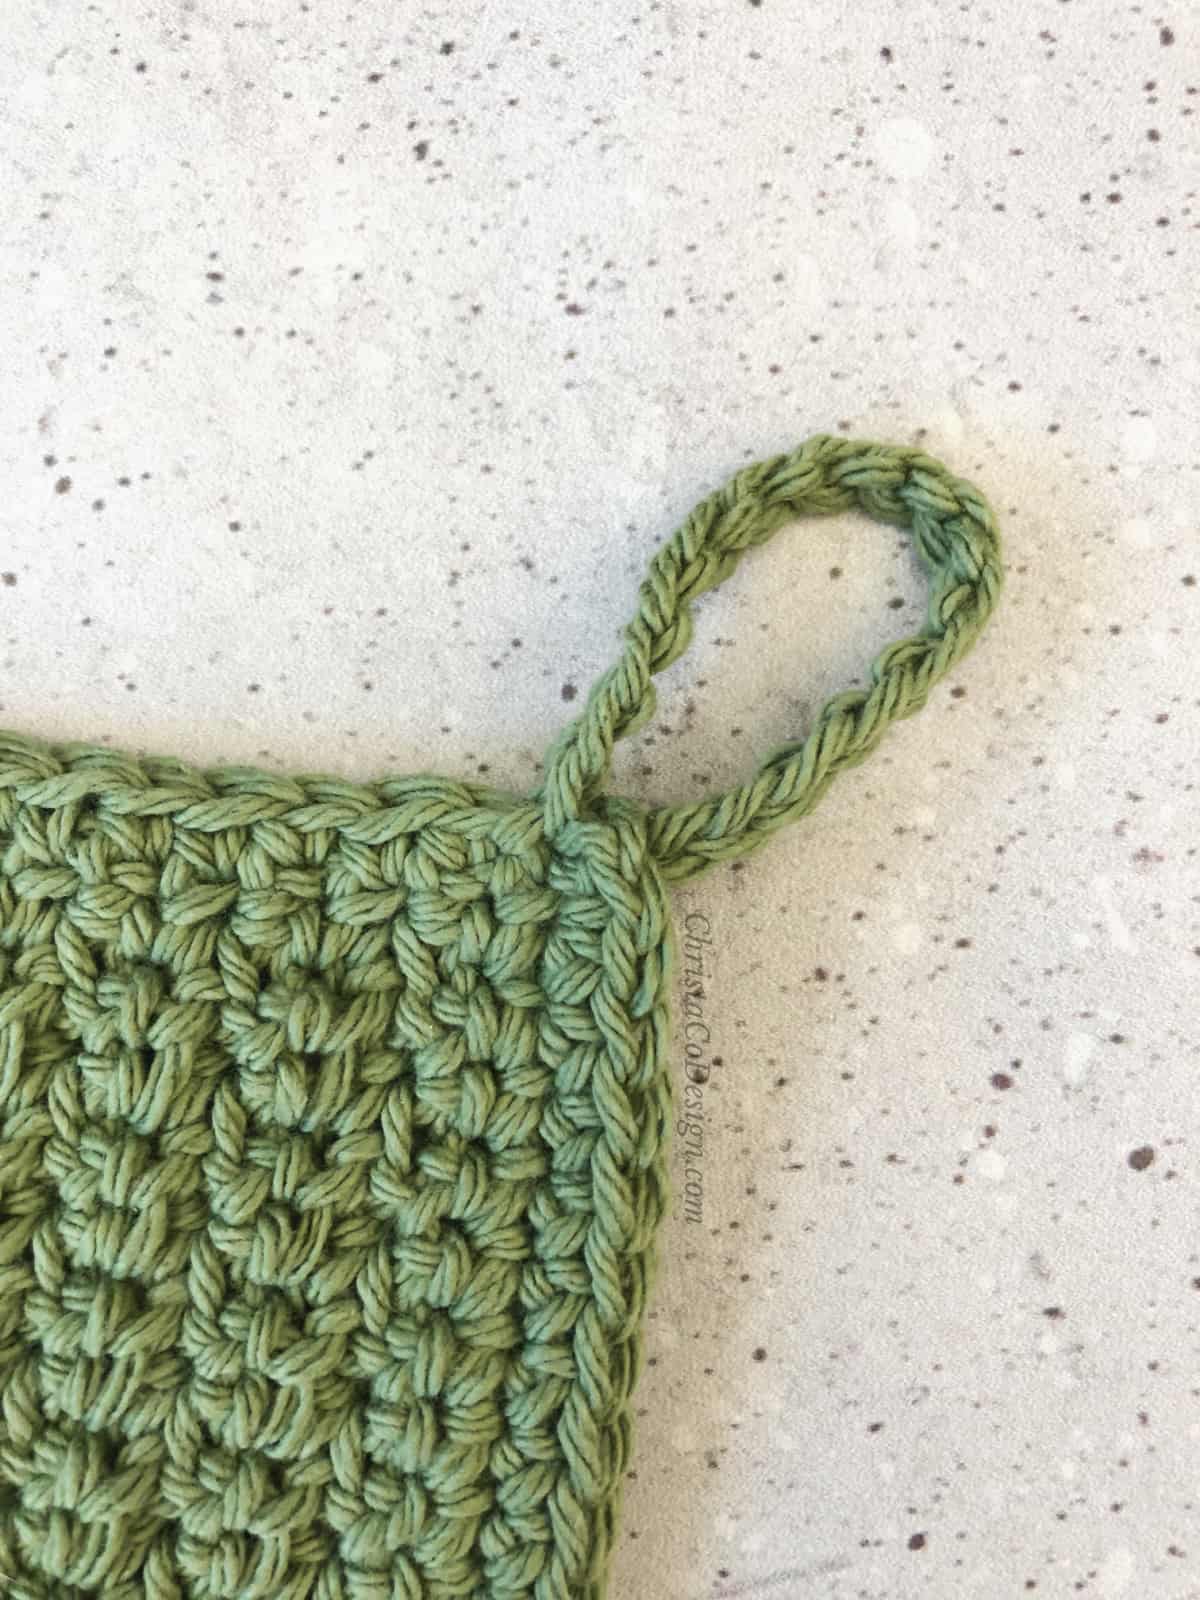 Loop for hanging crochet dishcloth.